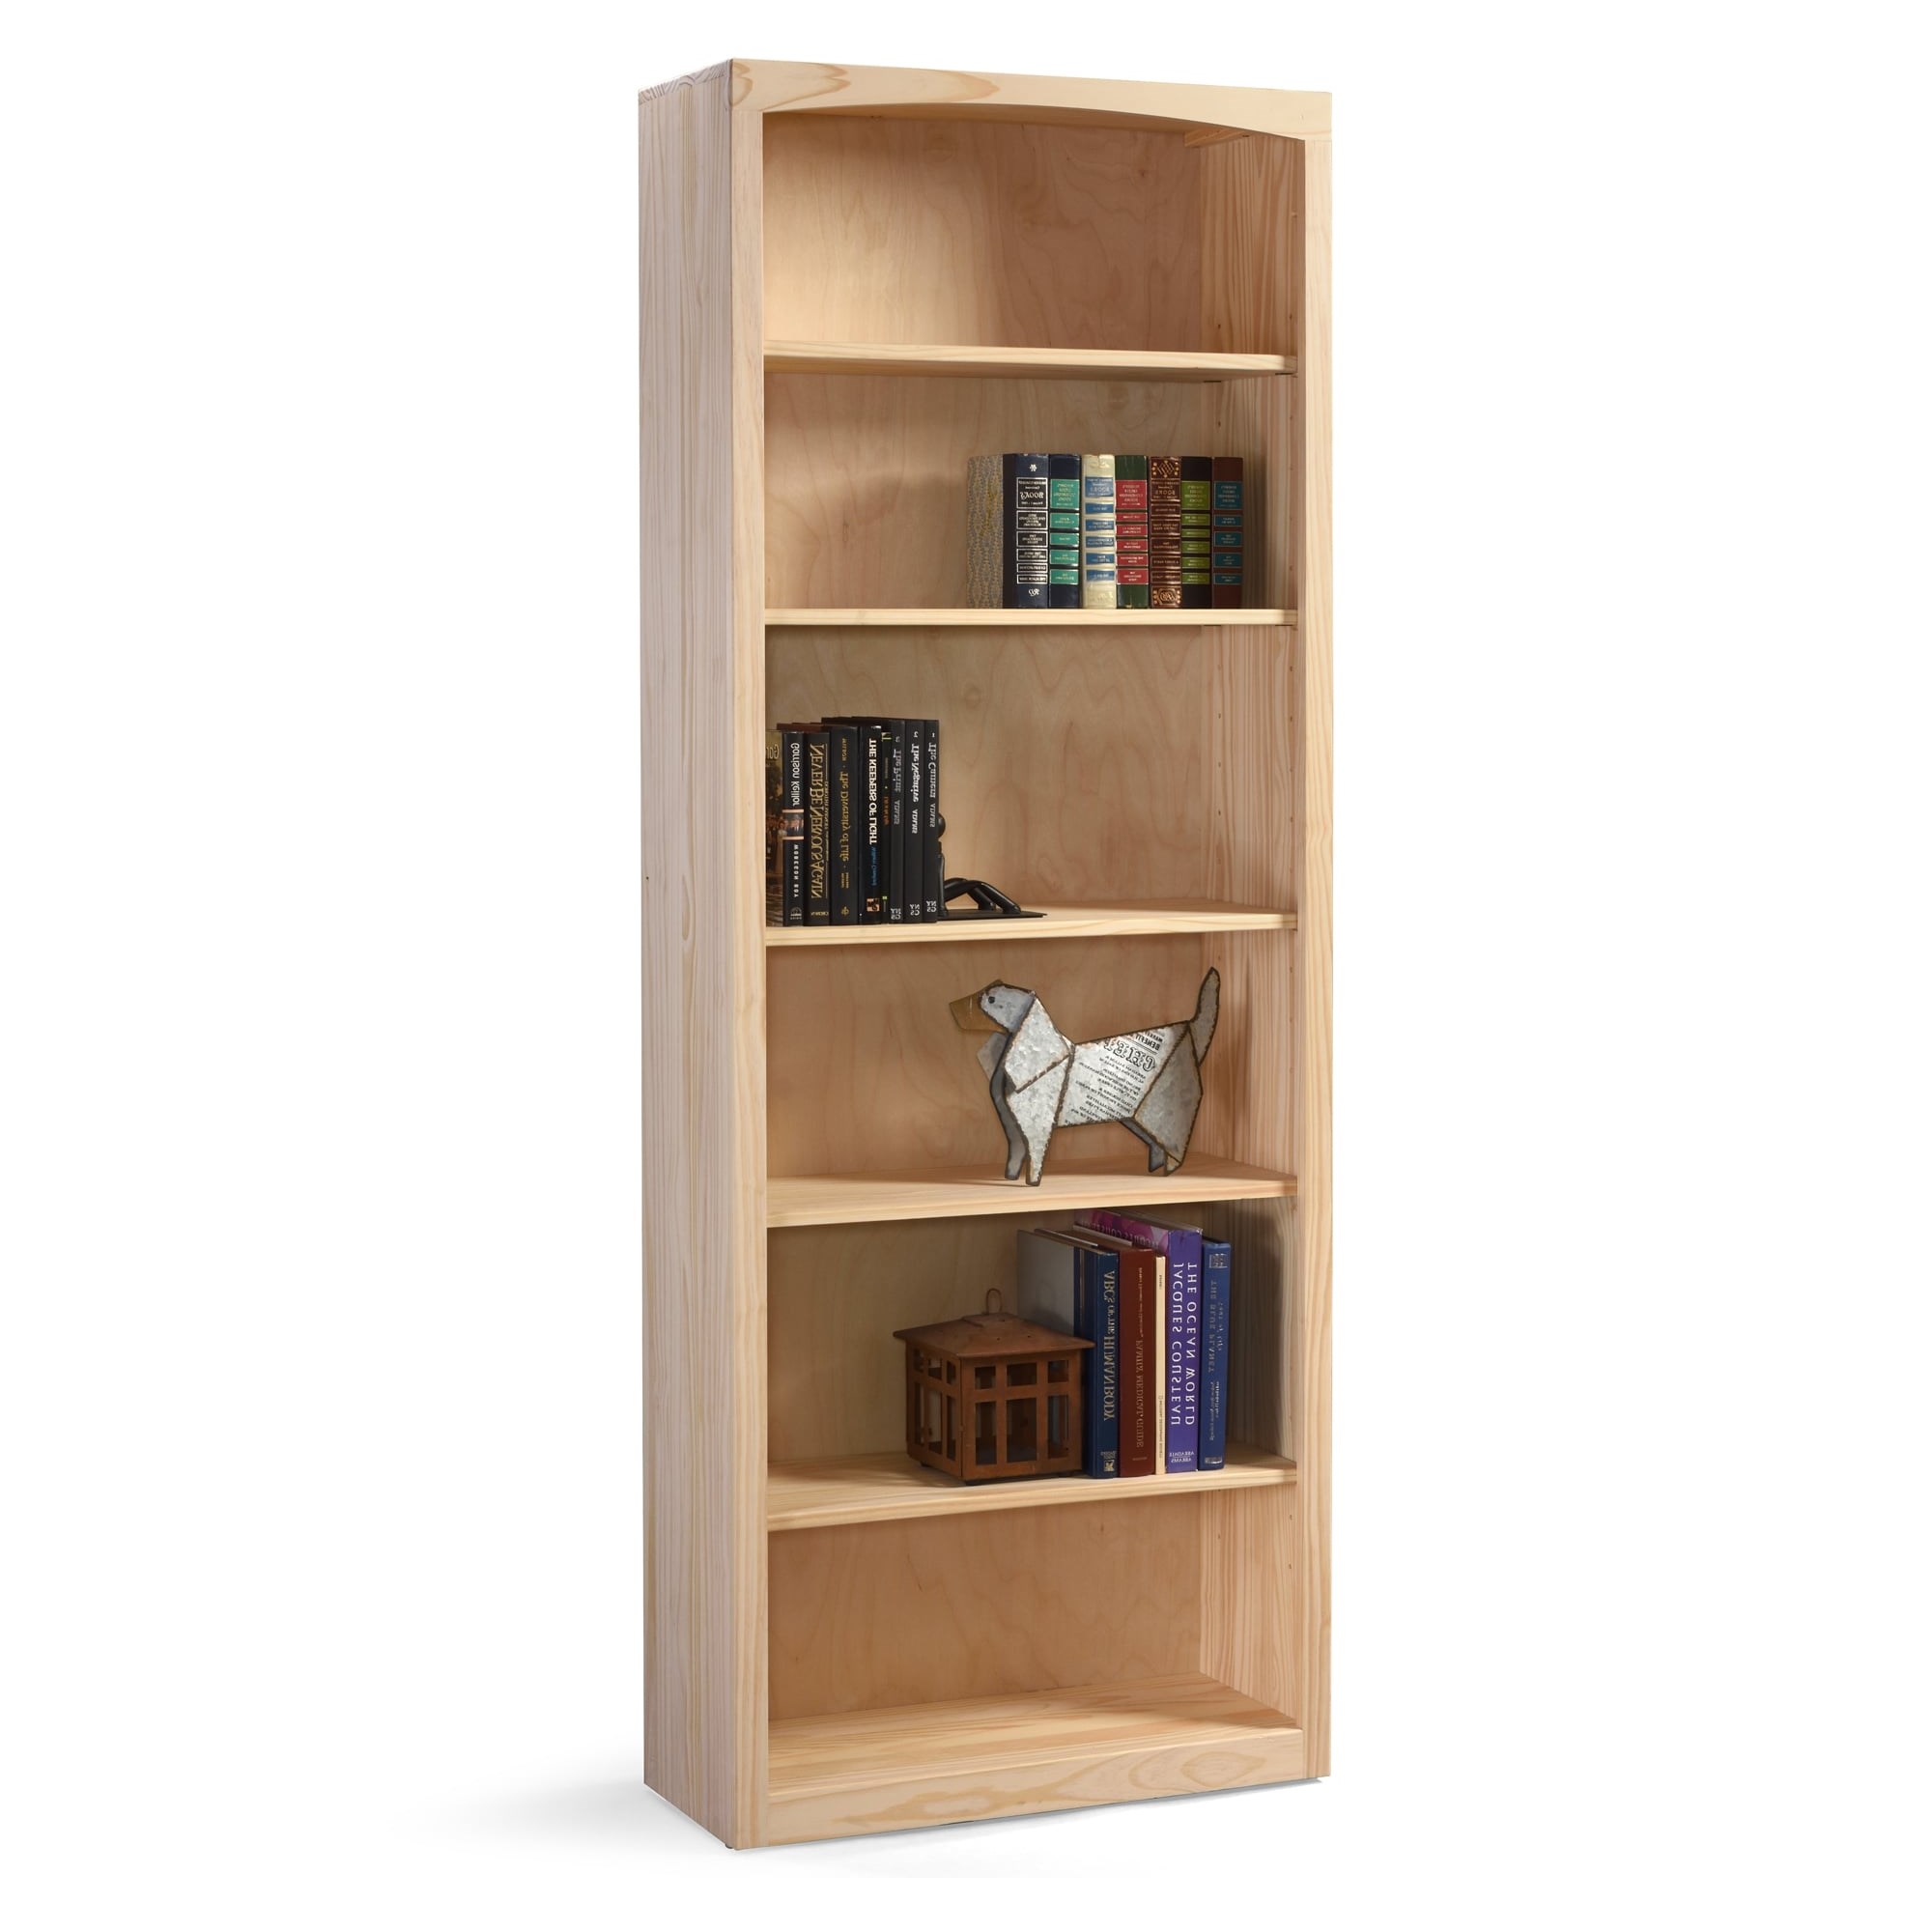 Alderwood Brown 3-Shelf Bookcase